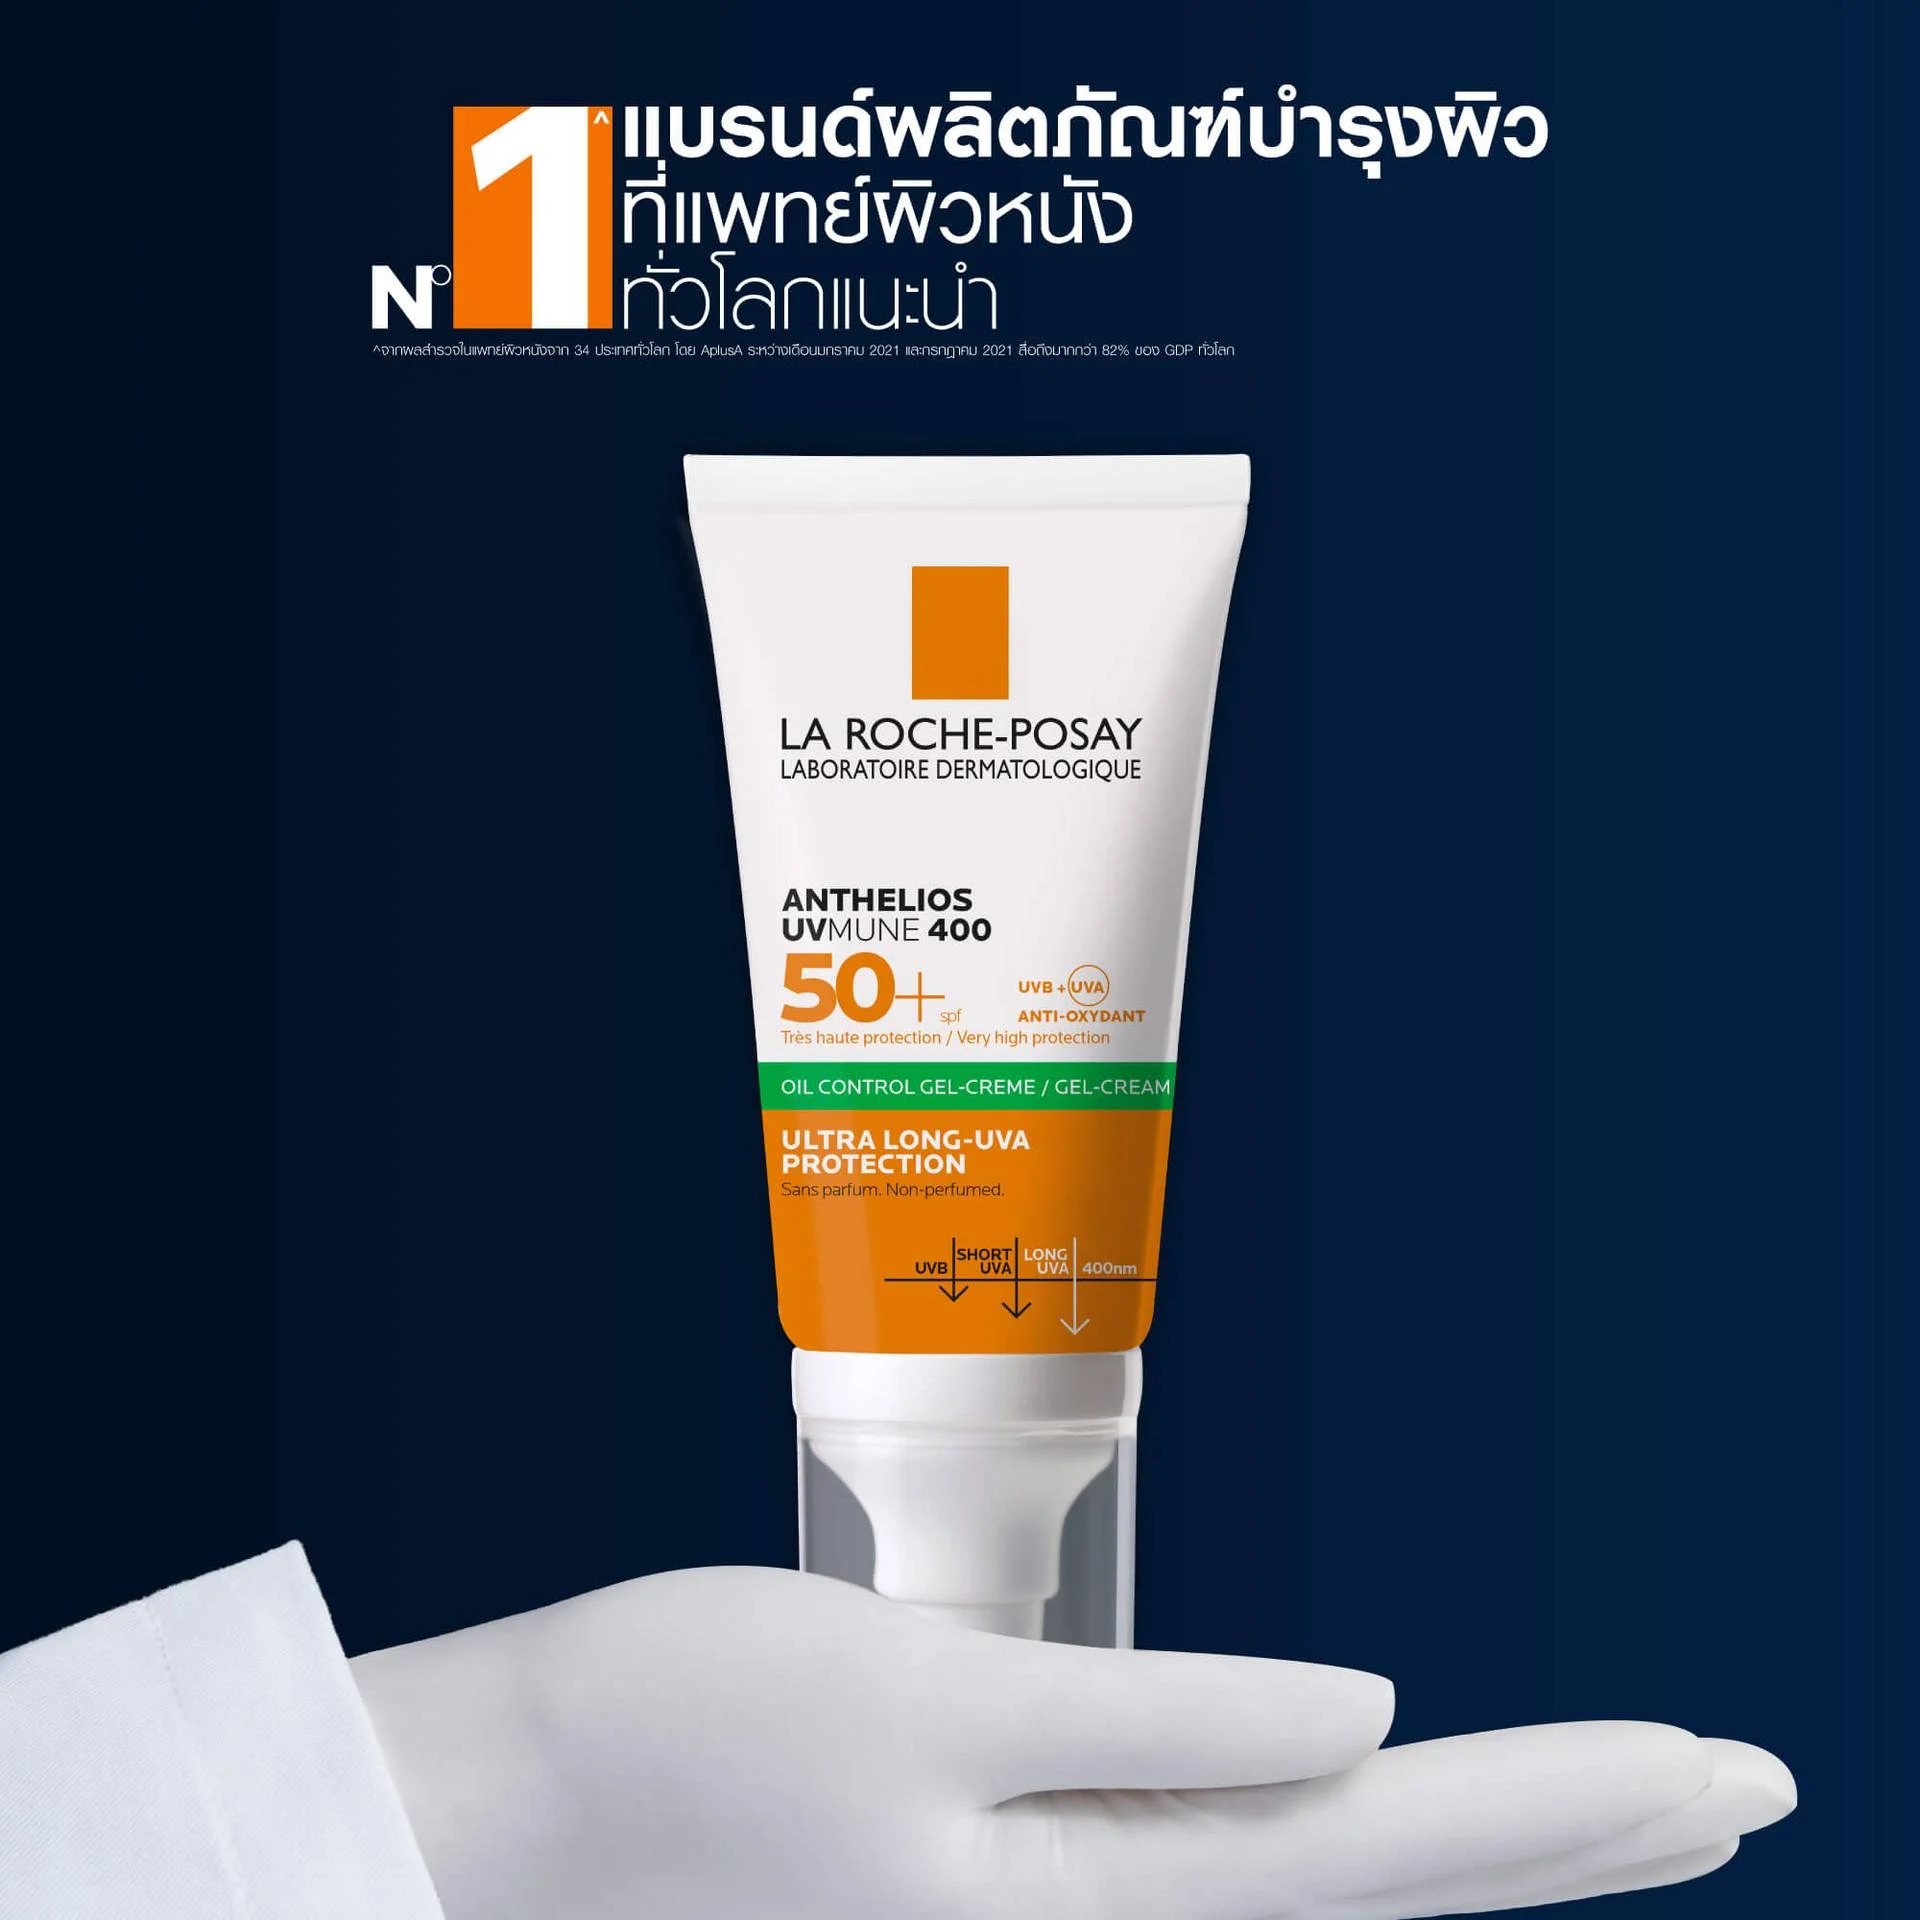 a Roche Posay Anti-Brillance 400 Anthelios XL dry touch Gel-Creme SPF 50+ mattifying effect sensitive skin 50ml สูตร sensitive